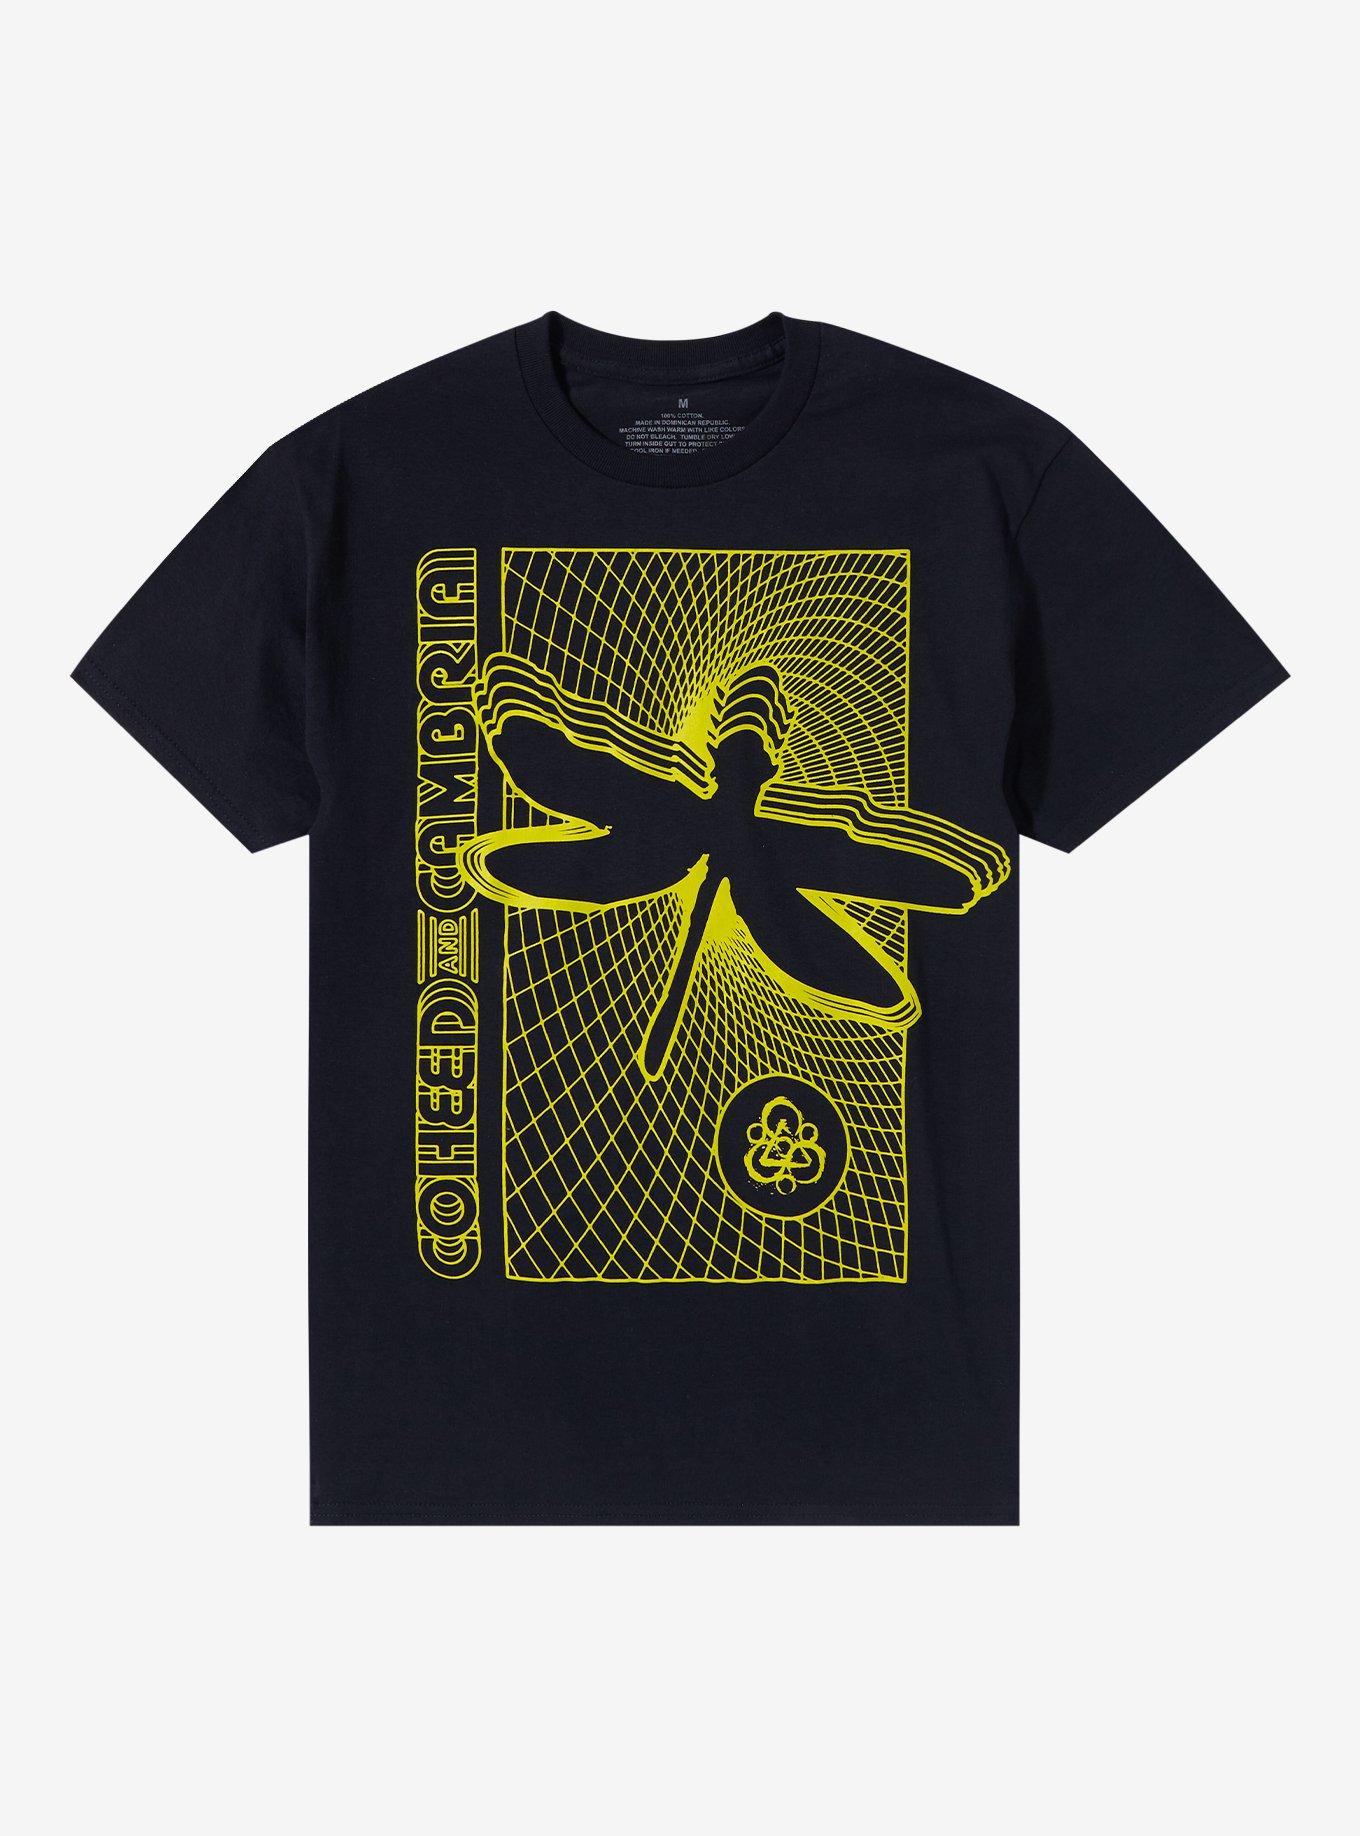 Coheed & Cambria Dragonfly Boyfriend Fit Girls T-Shirt, BLACK, hi-res